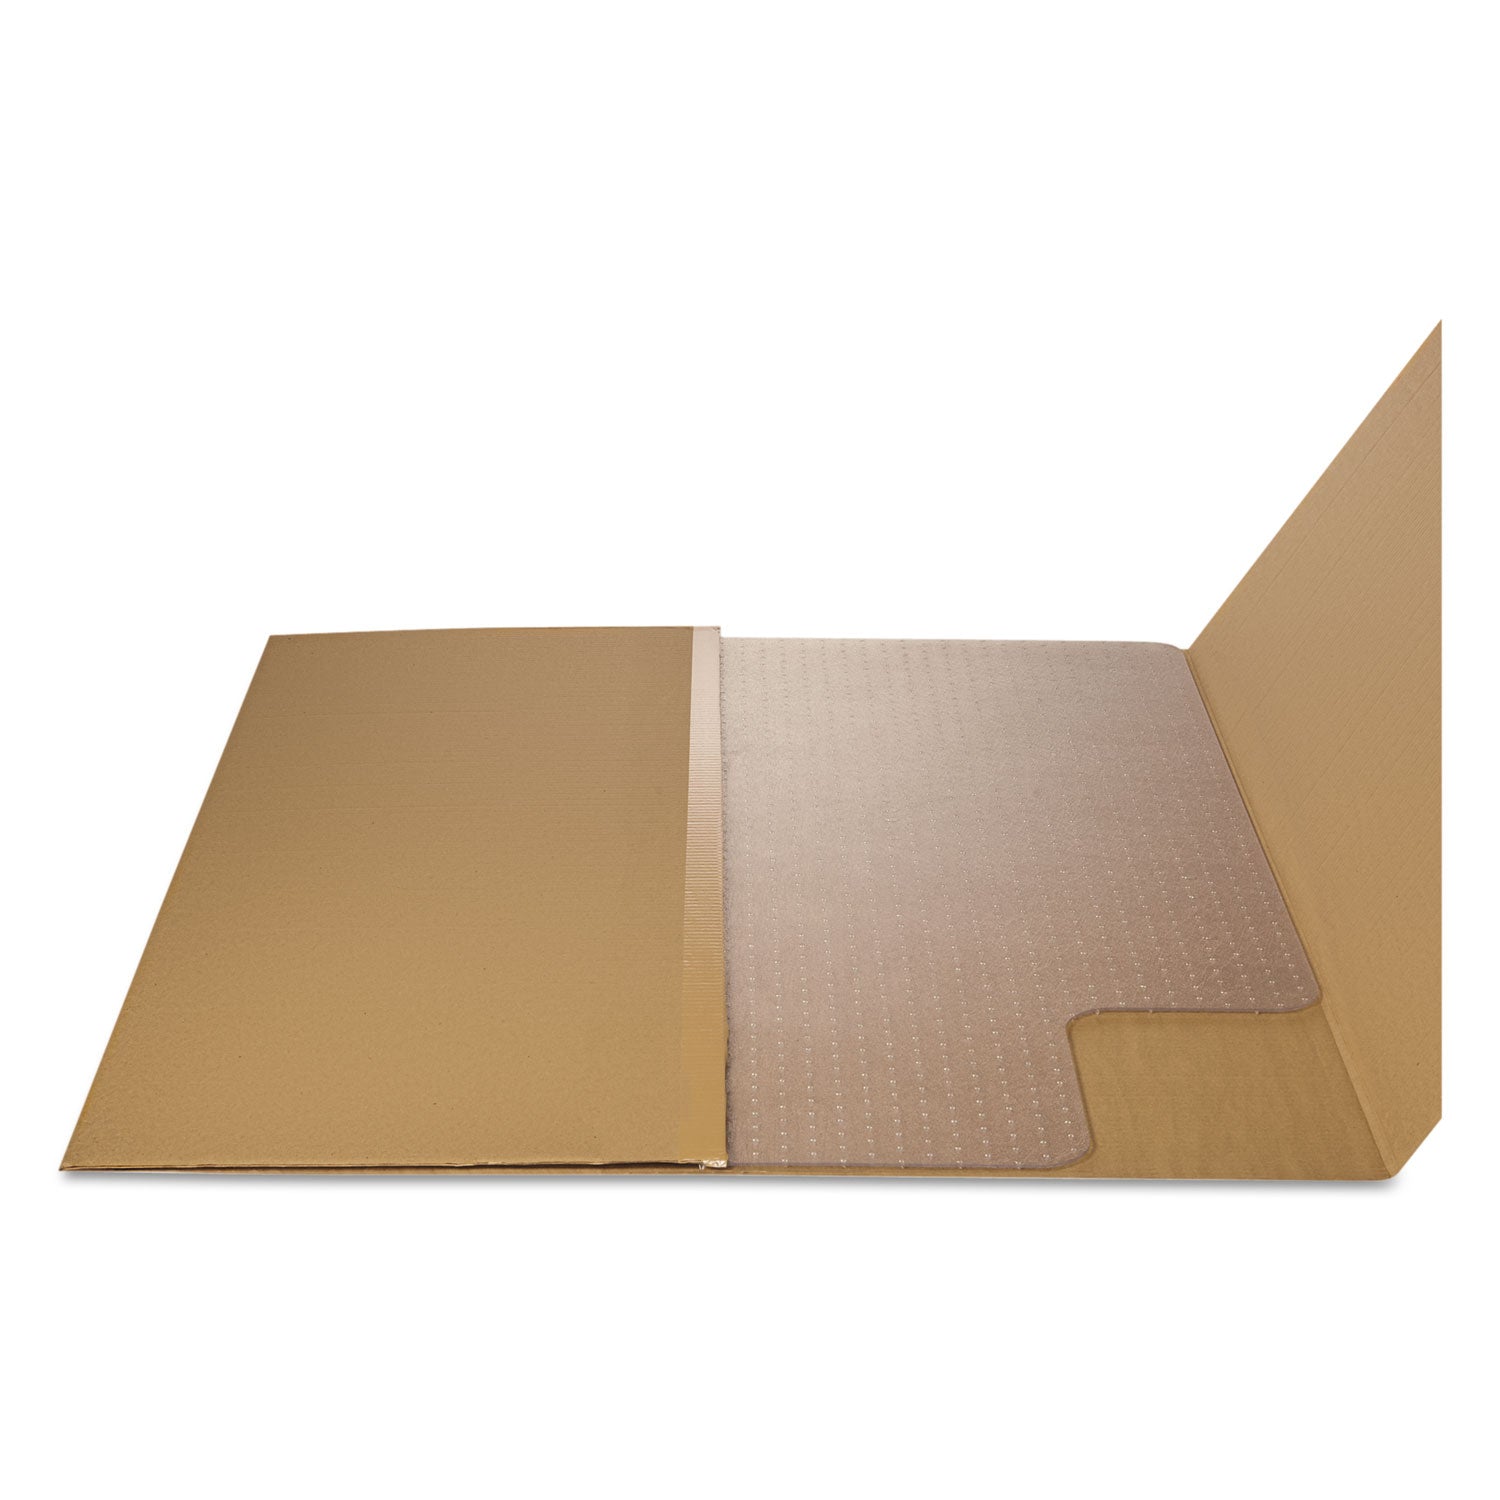 moderate-use-studded-chair-mat-for-low-pile-carpet-46-x-60-rectangular-clear_alemat4660clpr - 7